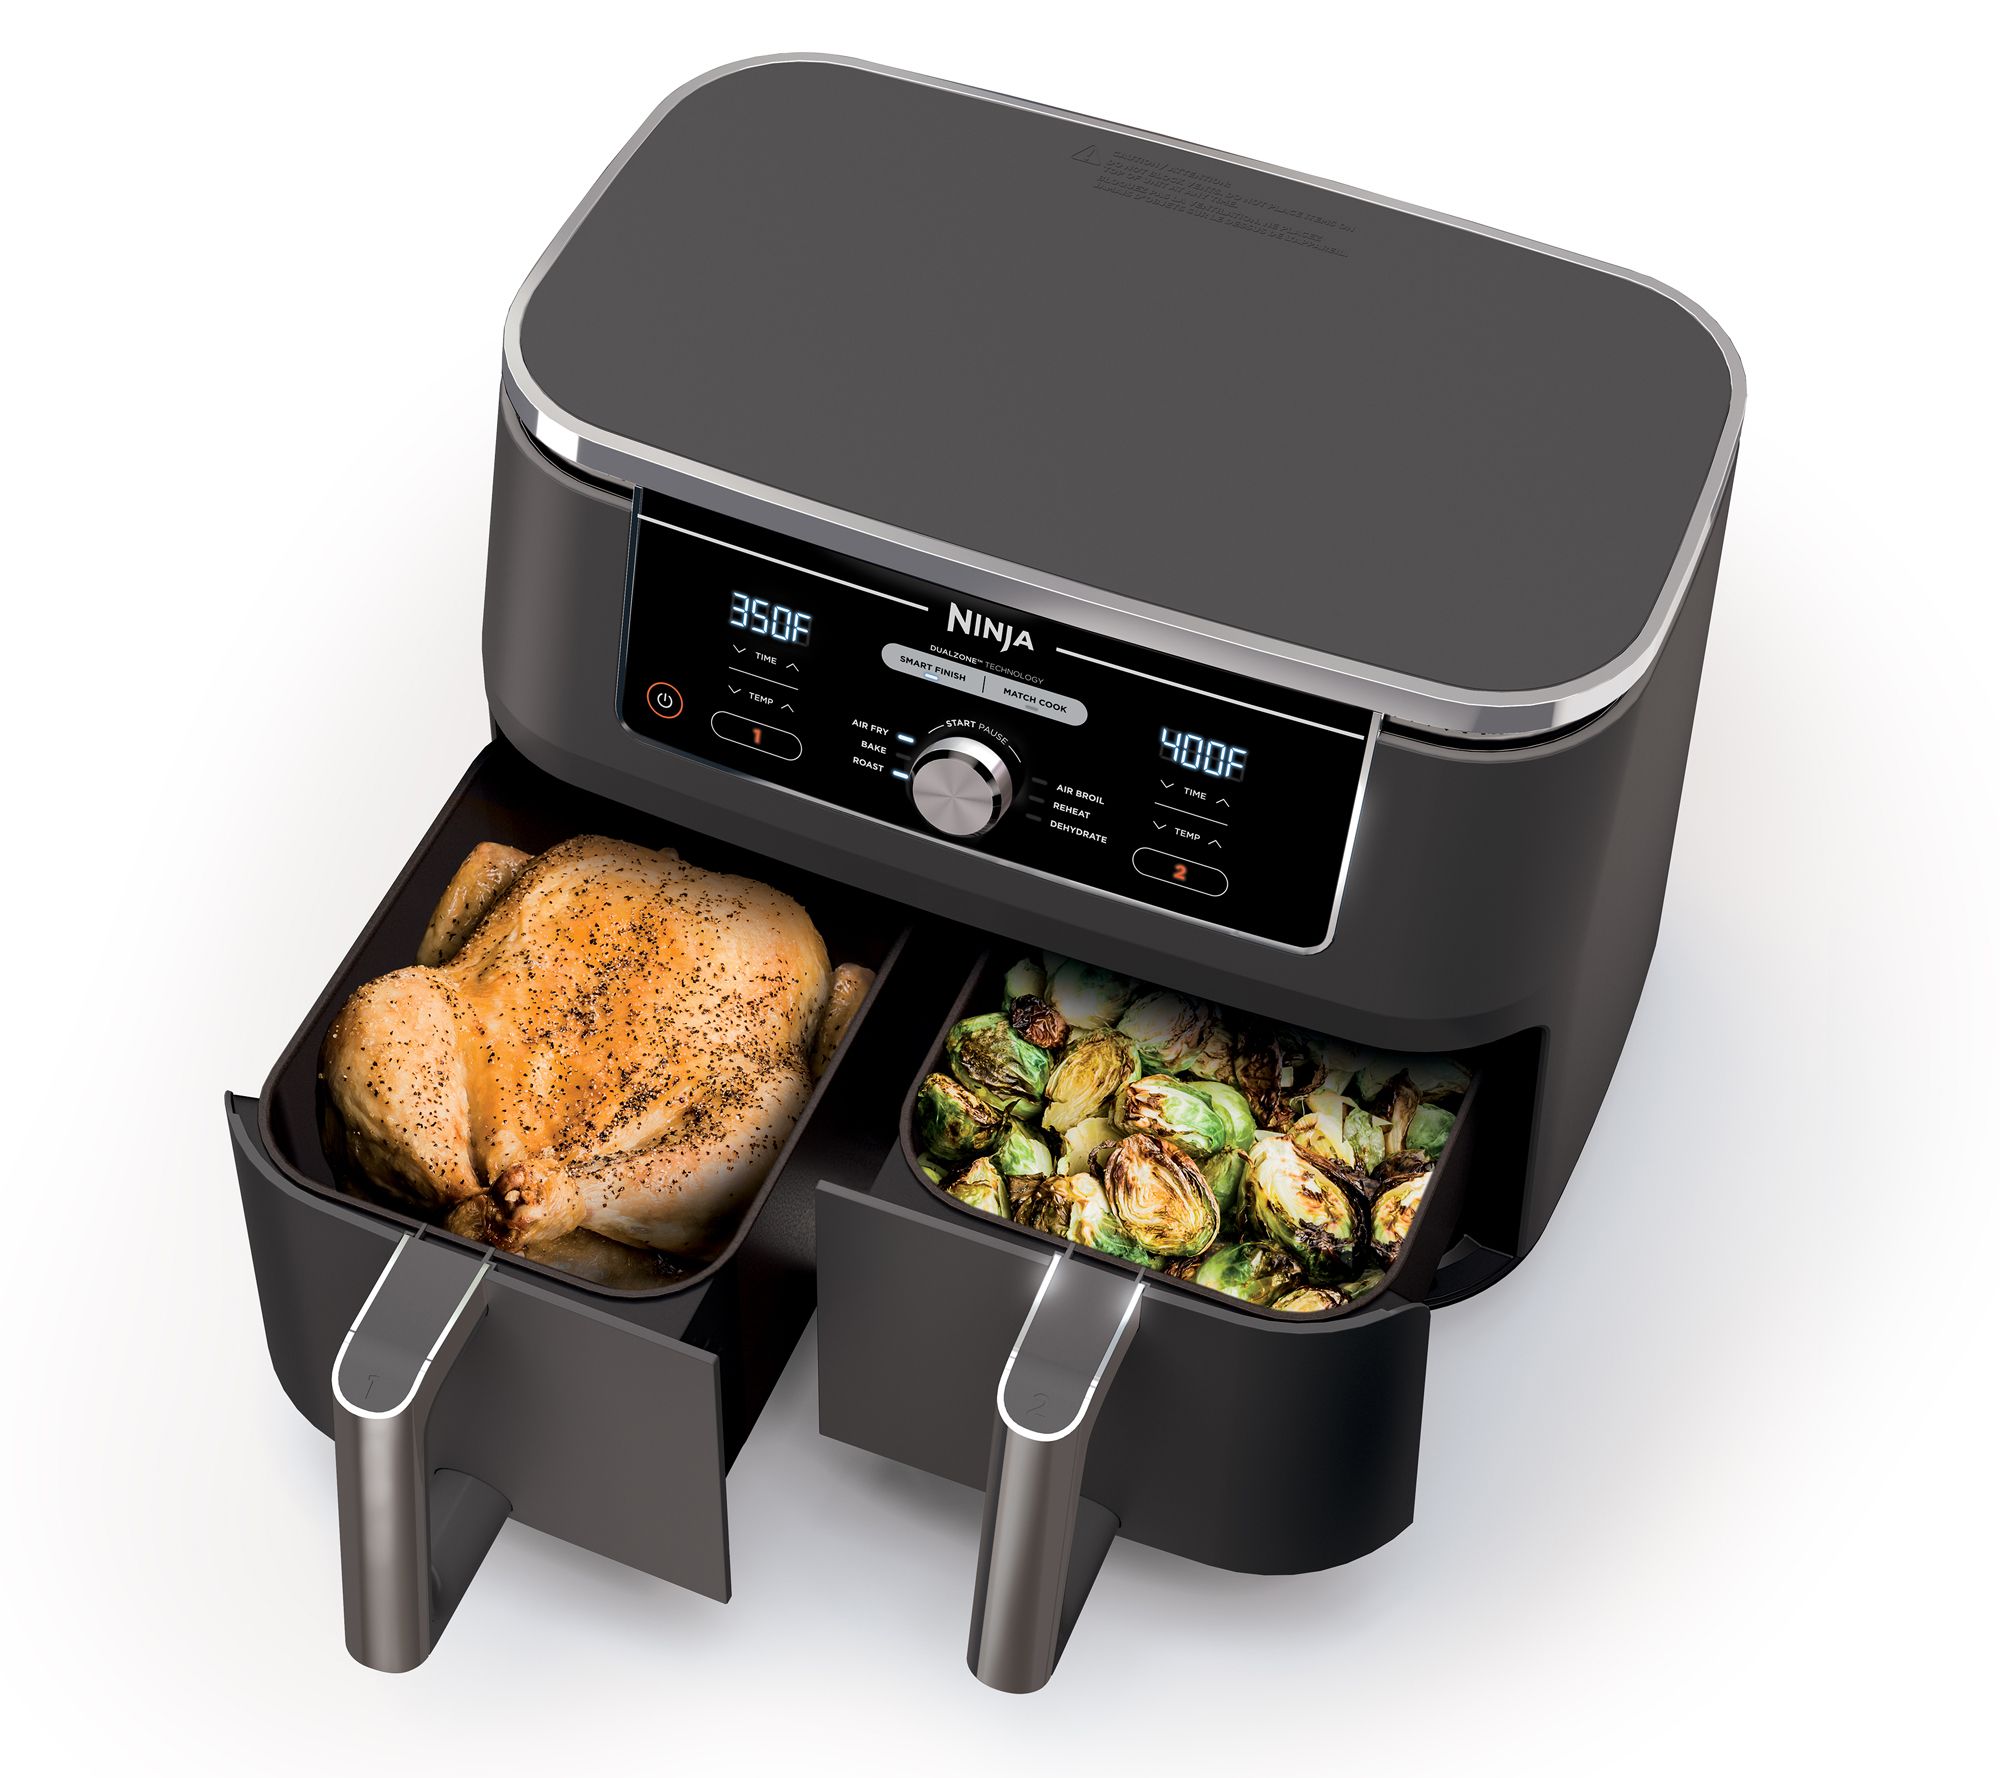 Save $65 on the Ninja Foodi smart indoor grill at QVC